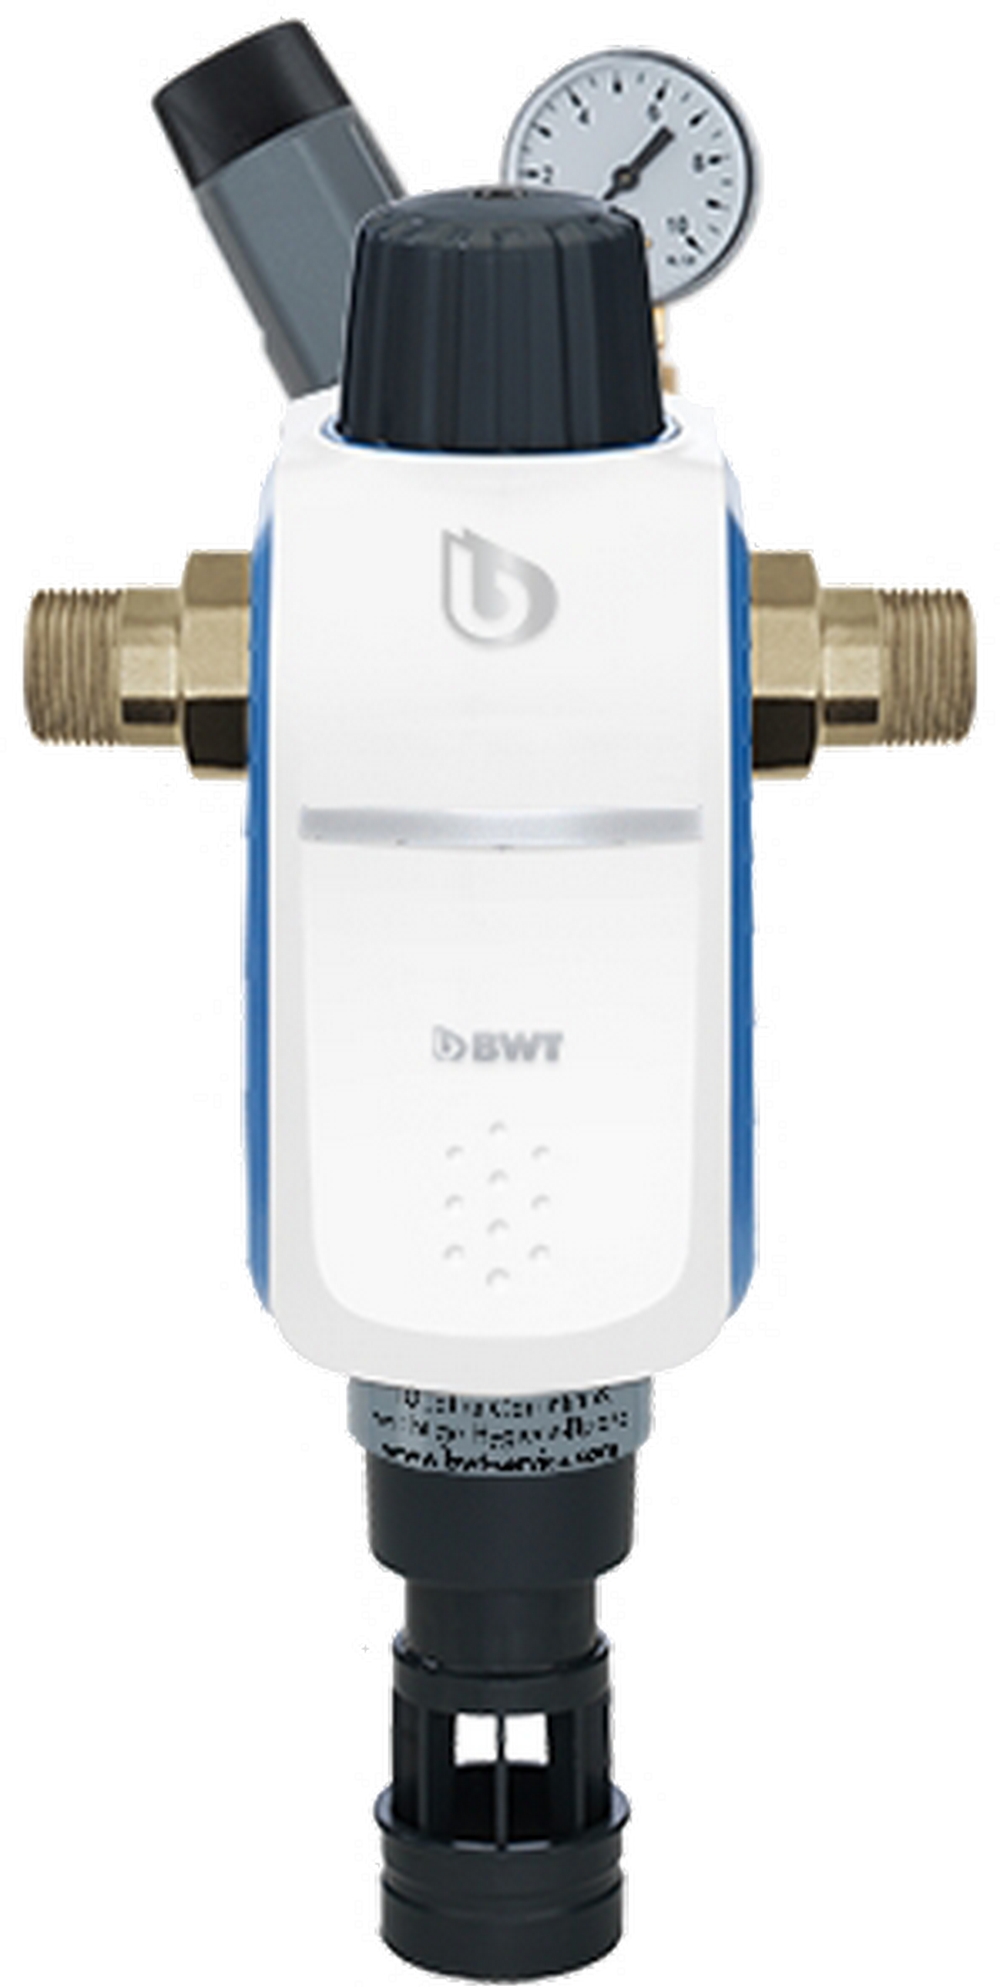 Інструкція фільтр BWT R1 HWS 3/4" с редуктором давления 840369